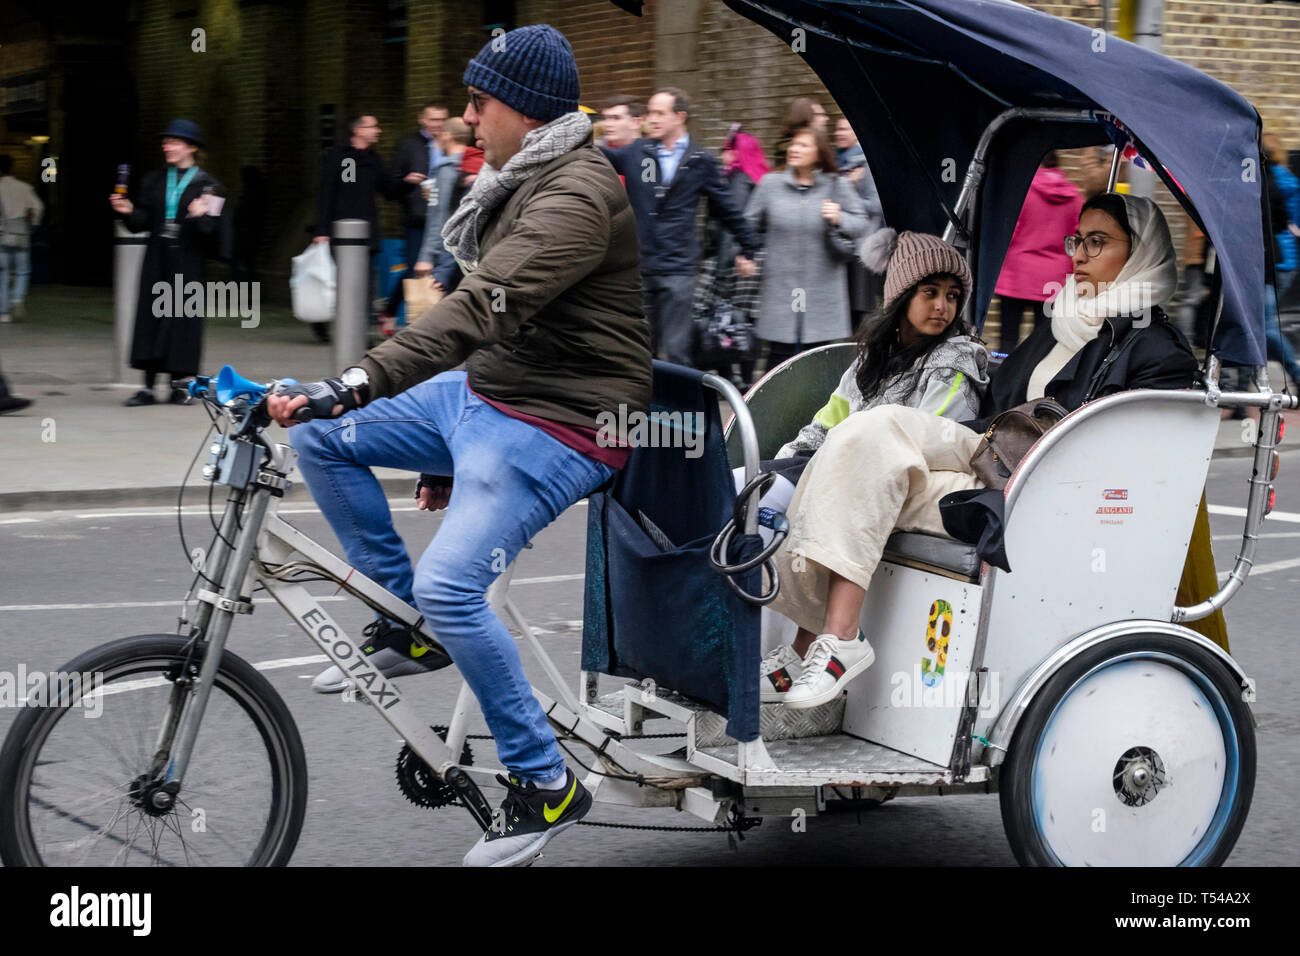 Cycle rickshaw taxi sulla strada di Londra. Foto Stock